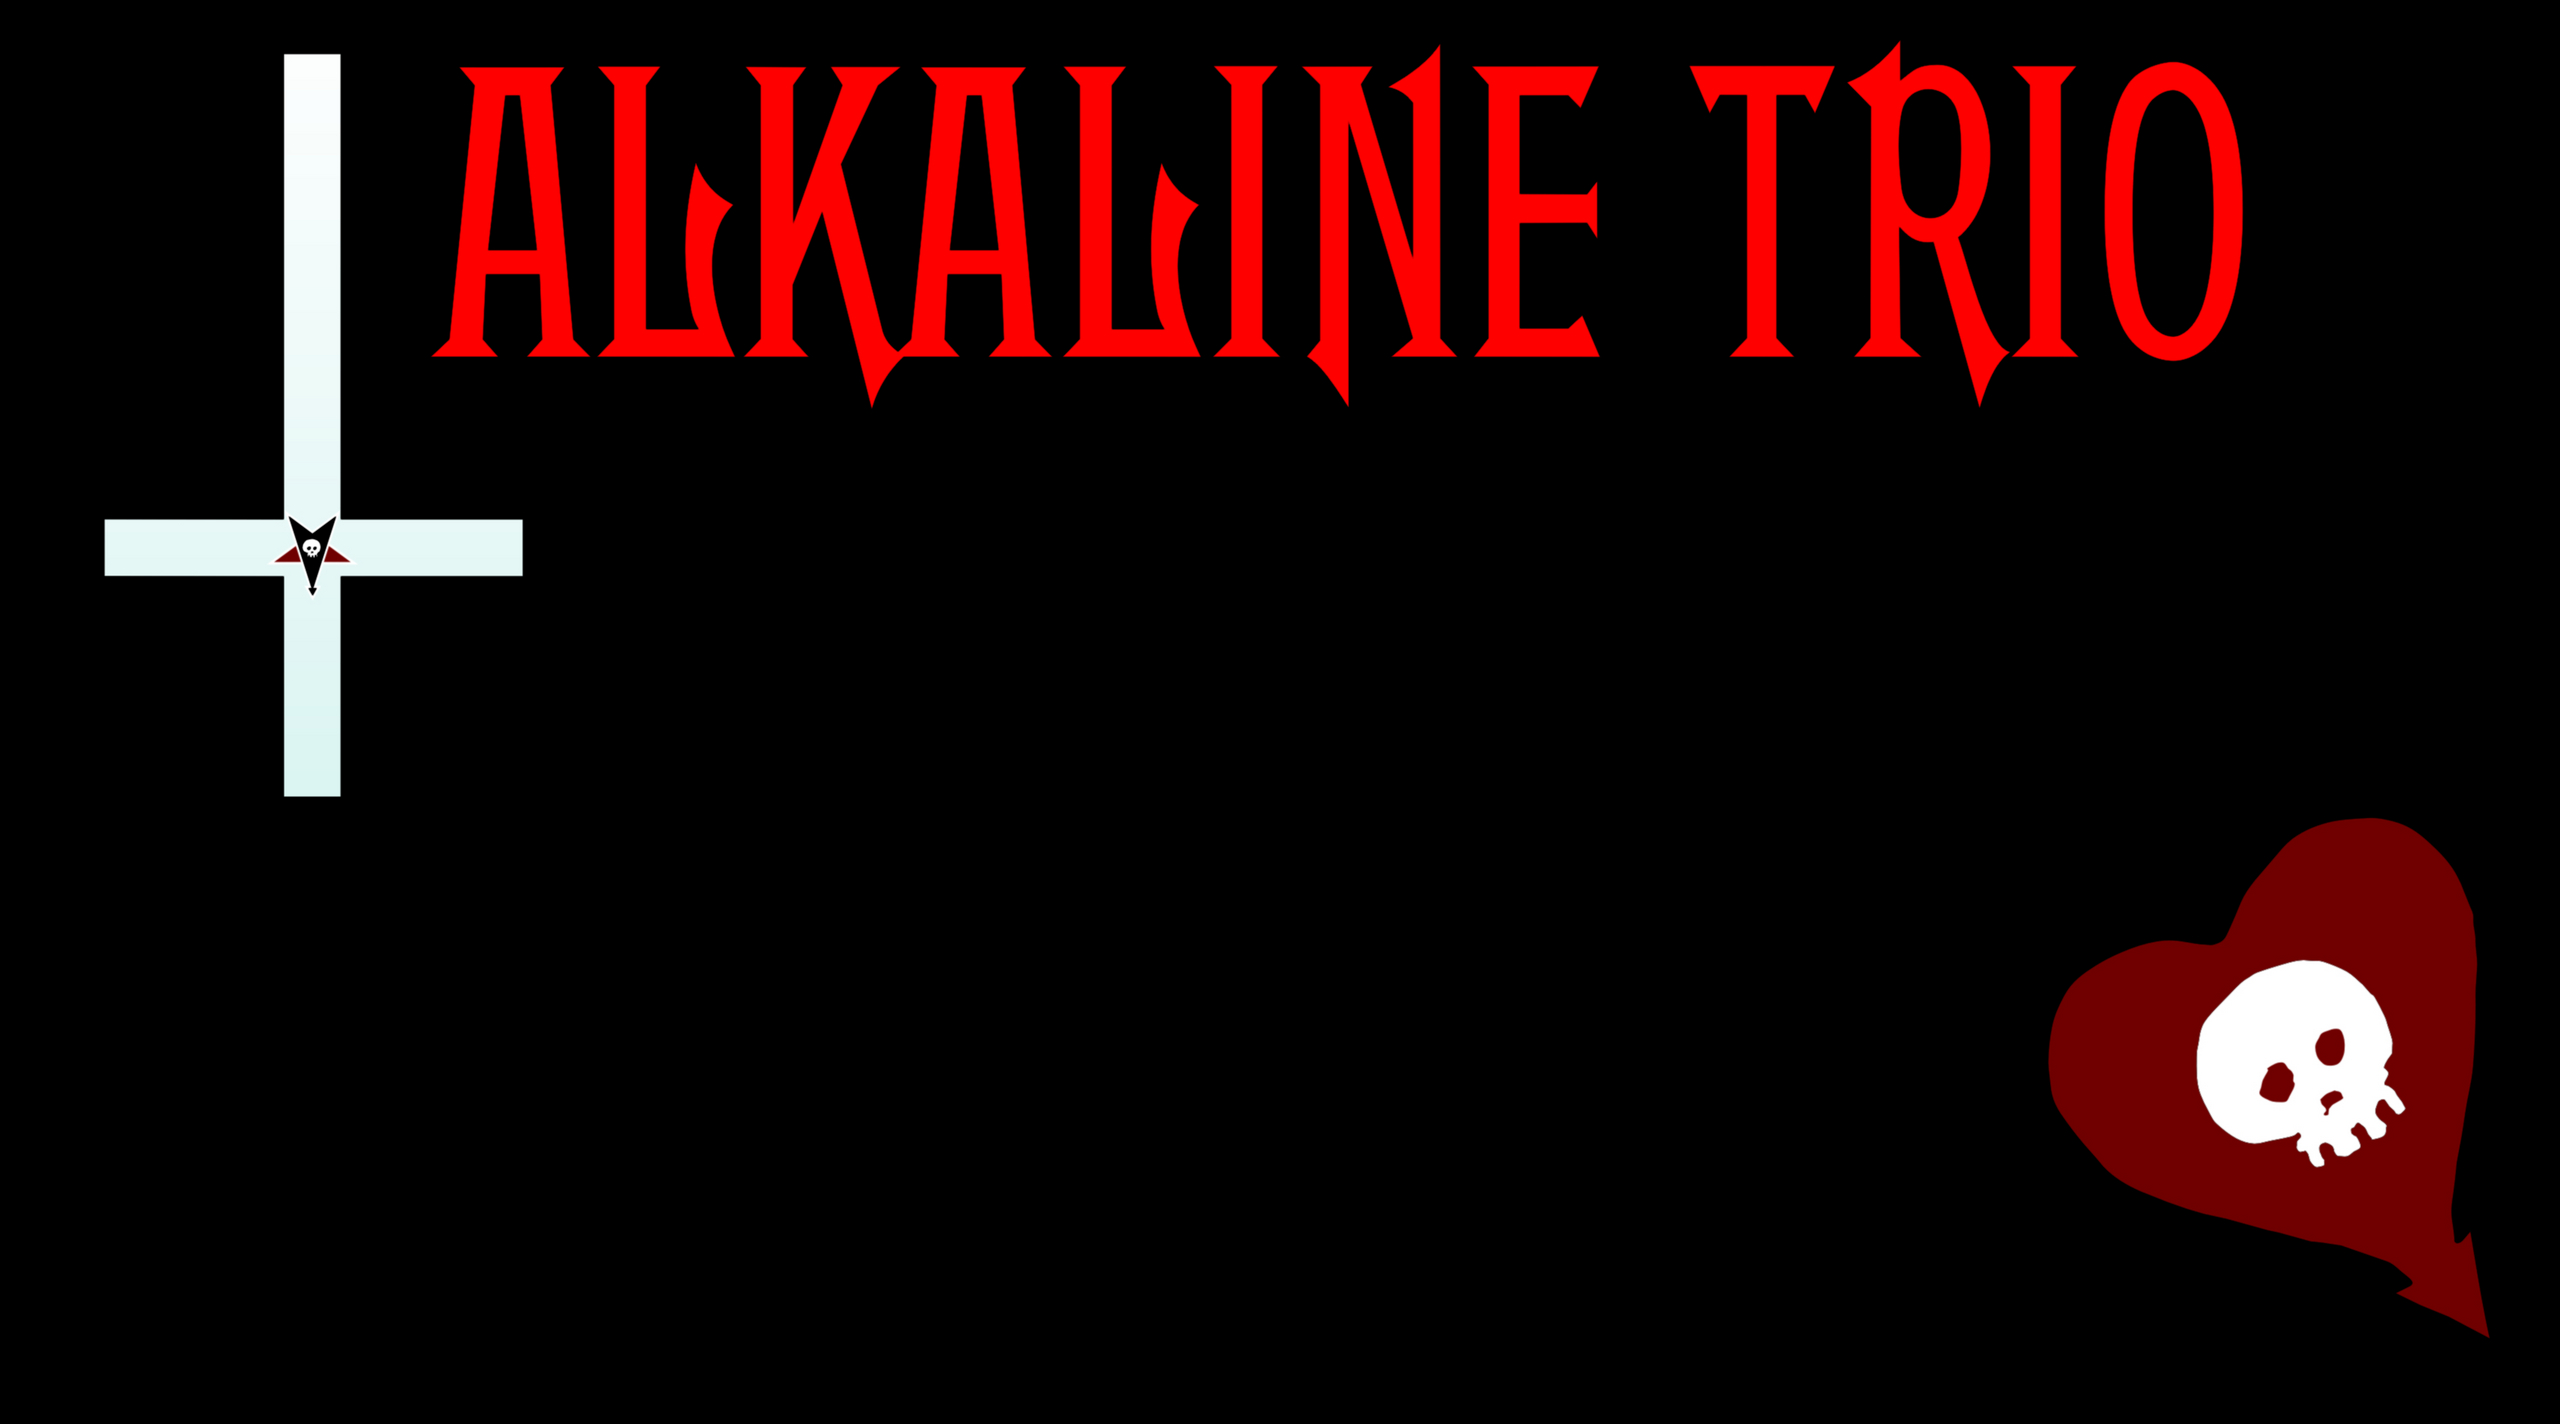 Alkaline Trio Image Wallpaper HD